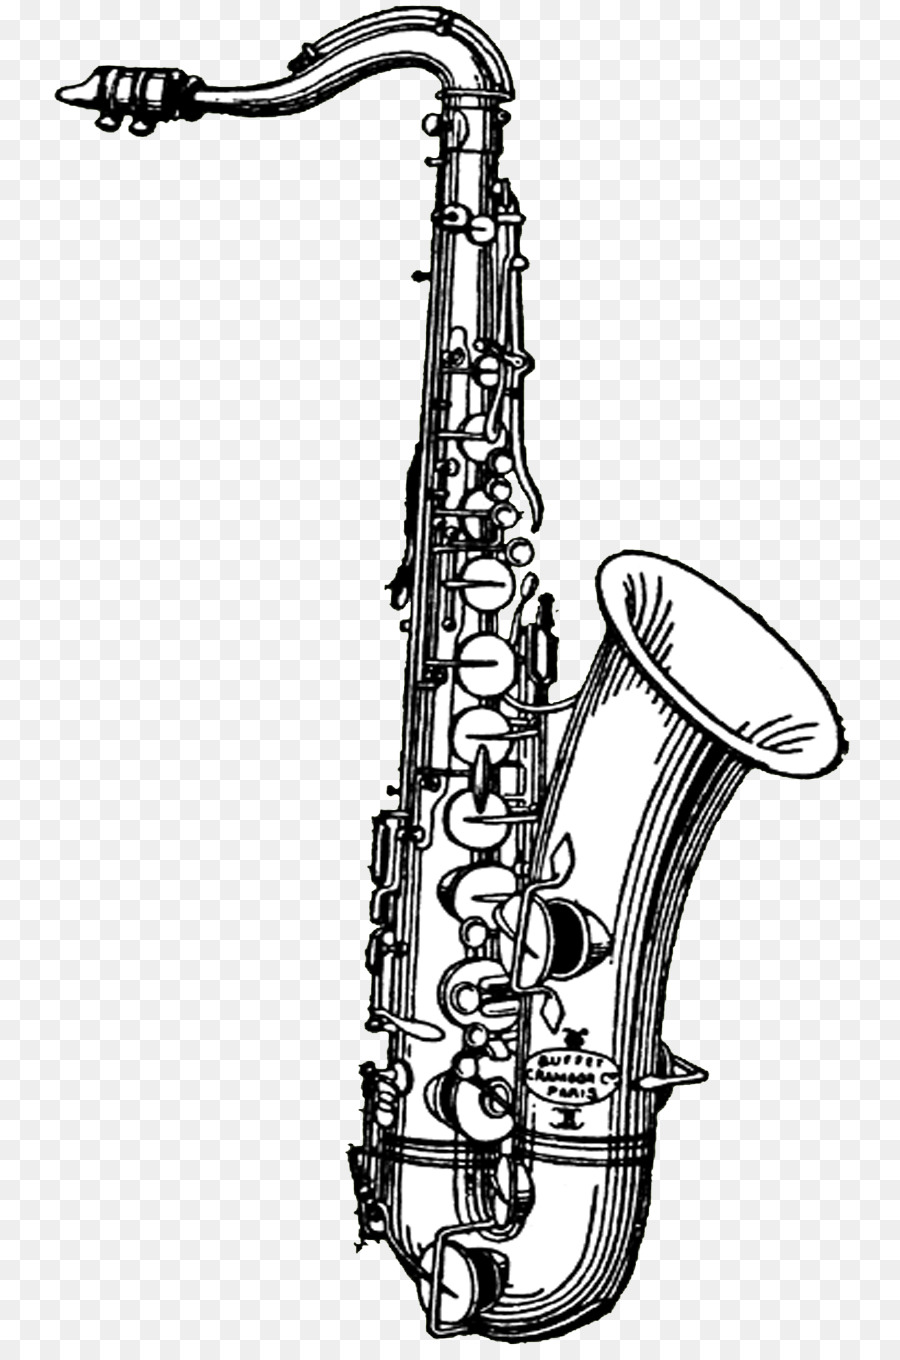 Tenor saxophone Clip art - Saxophone PNG Transparent Images png download - 810*1350 - Free Transparent Saxophone png Download.